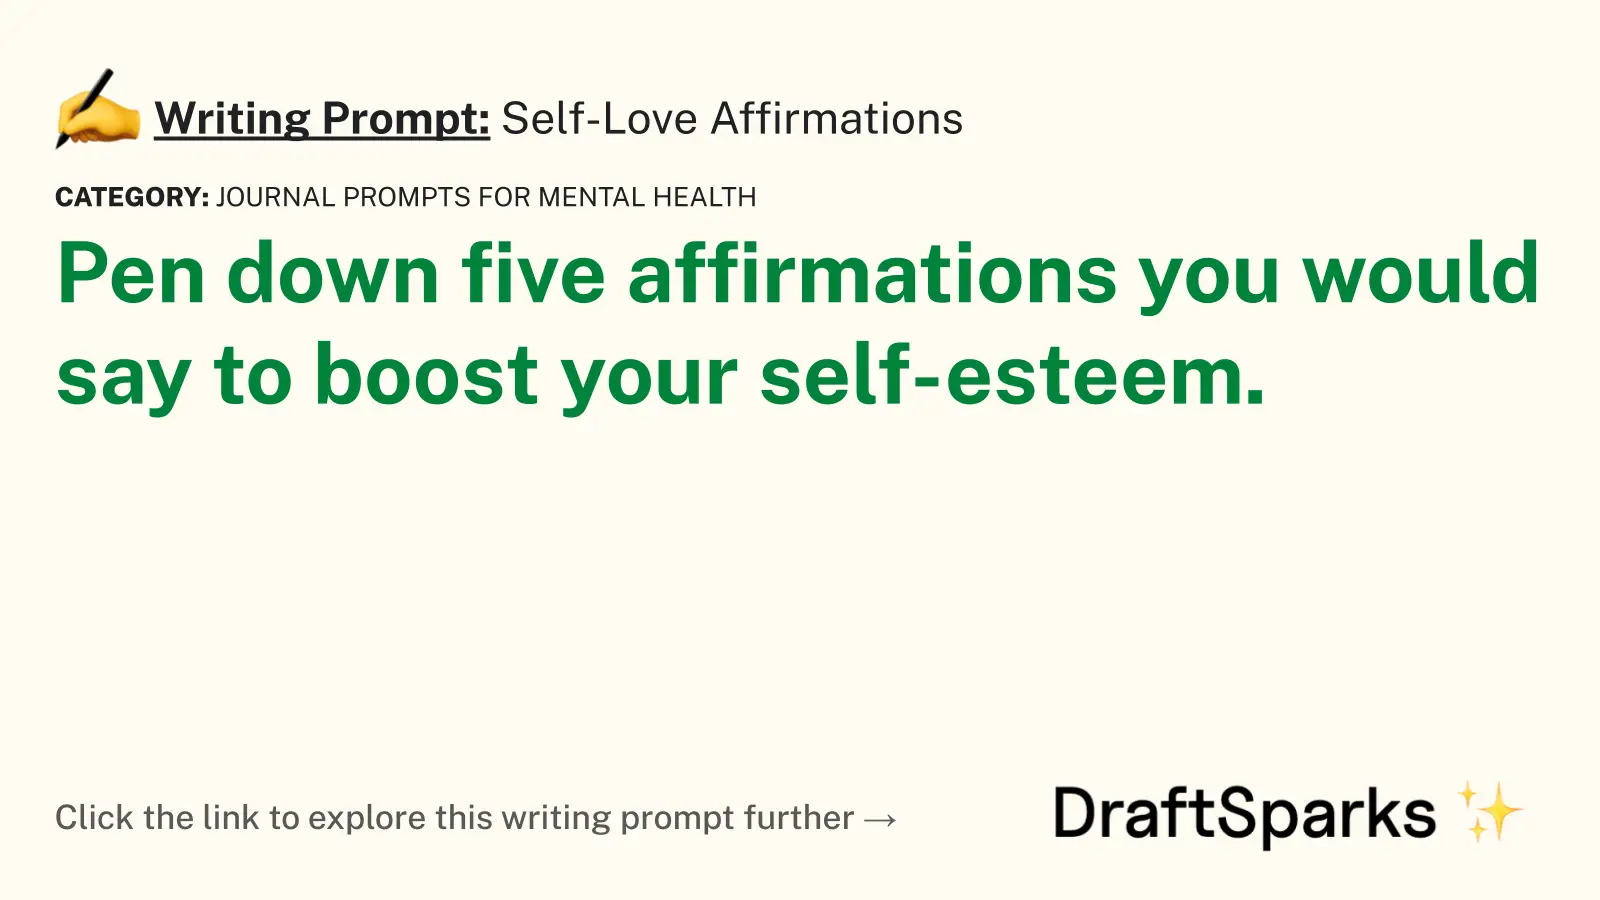 Self-Love Affirmations